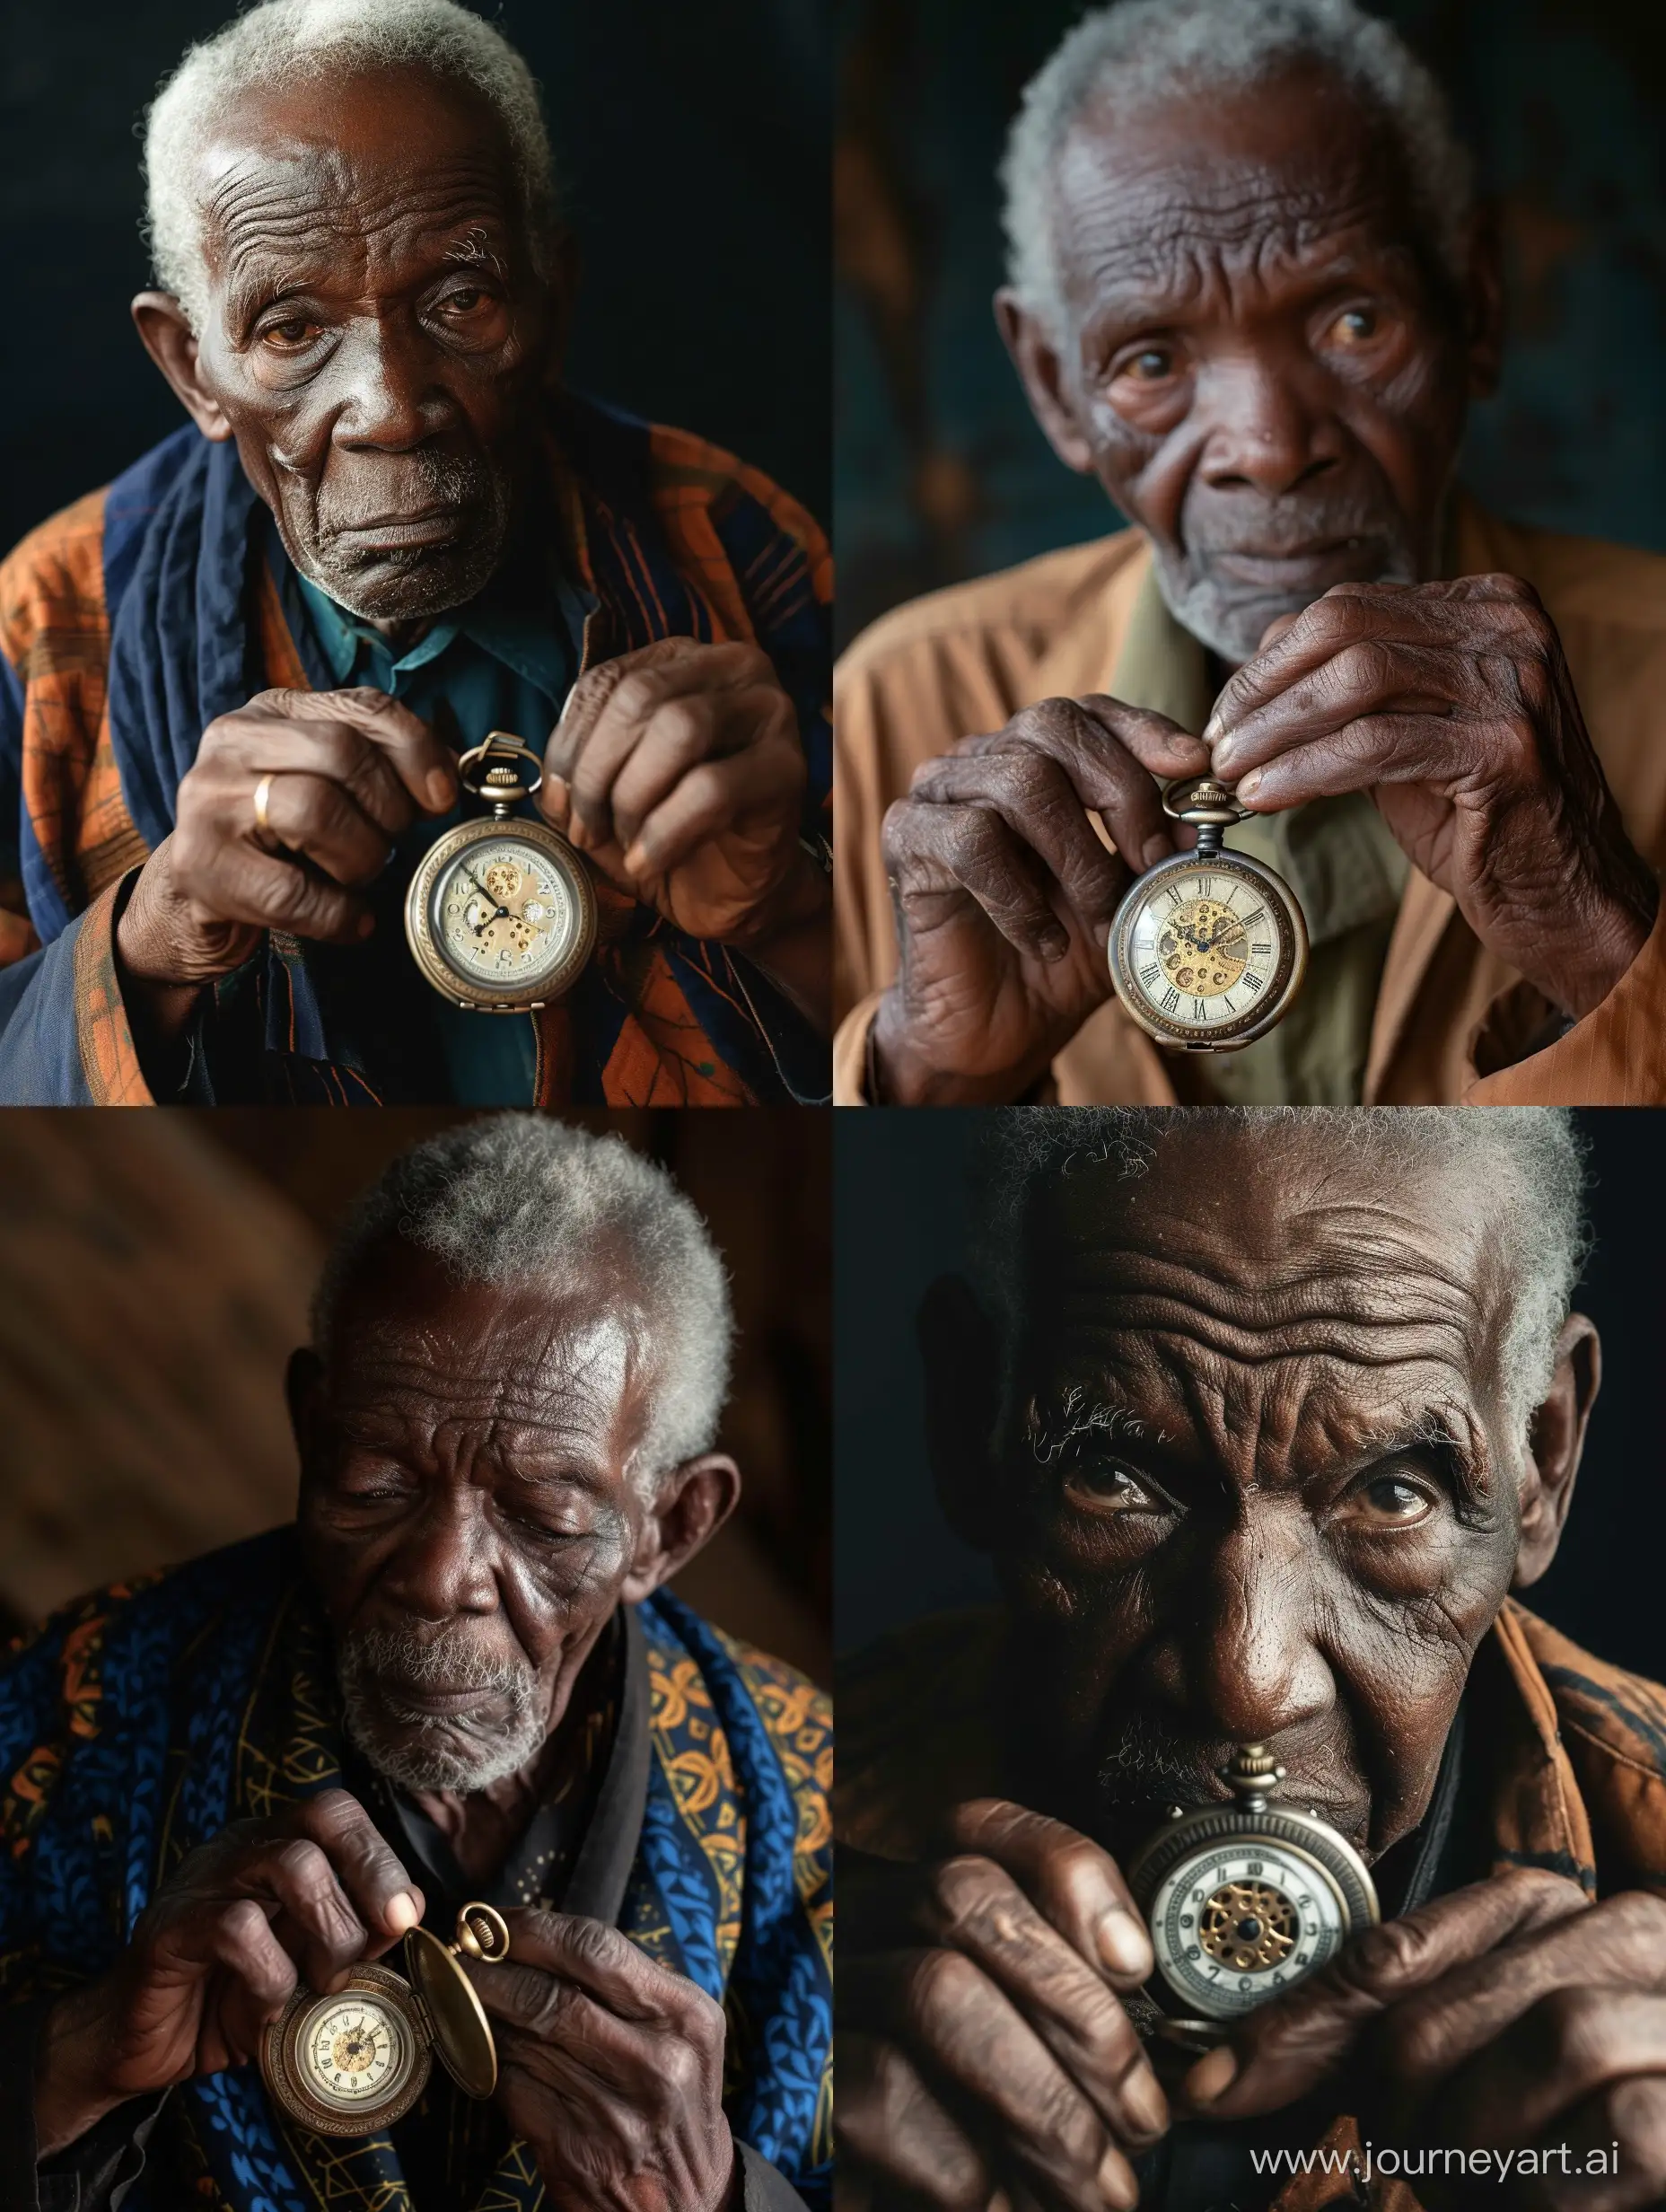 Elderly-African-Gentleman-Engrossed-in-Time-with-Vintage-Pocket-Watch